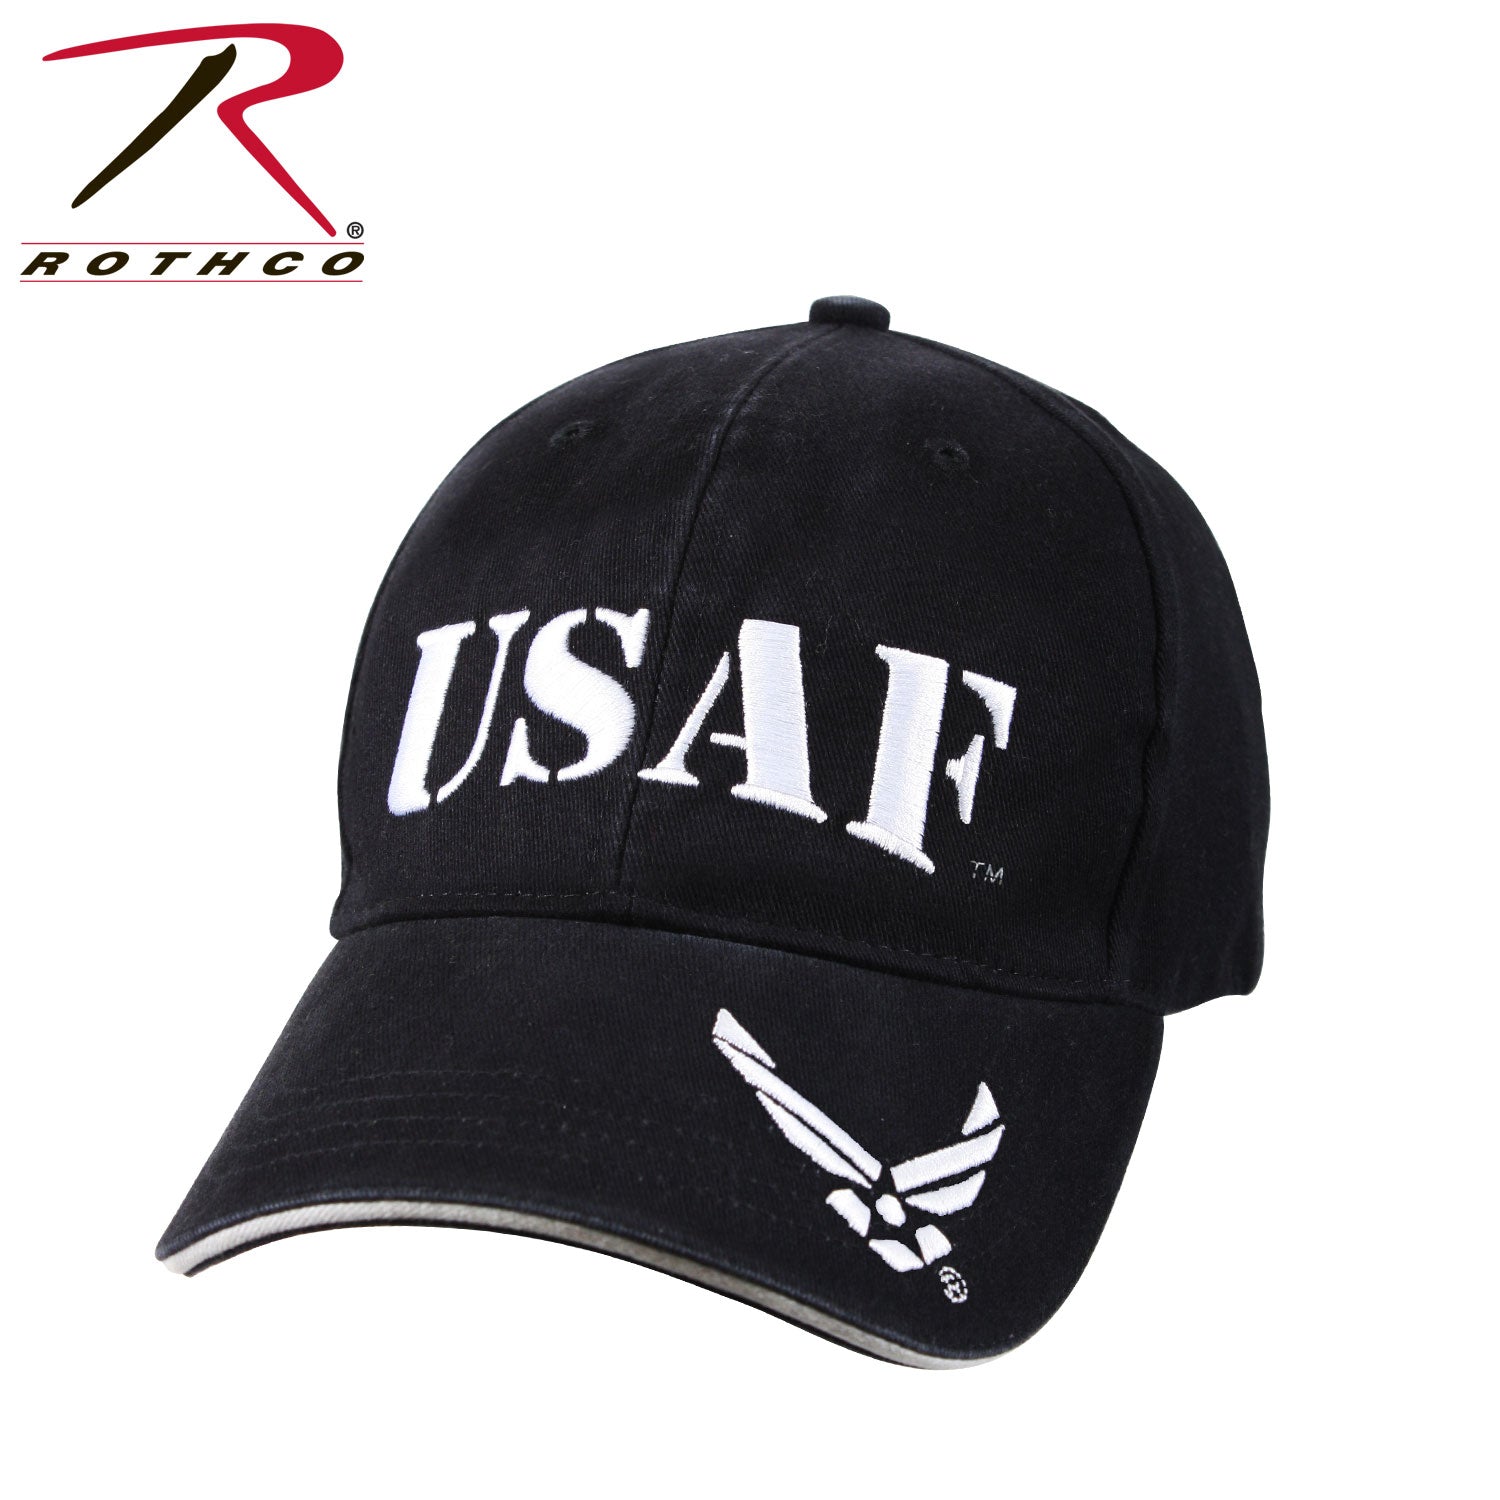 Rothco Vintage USAF Low Profile Cap